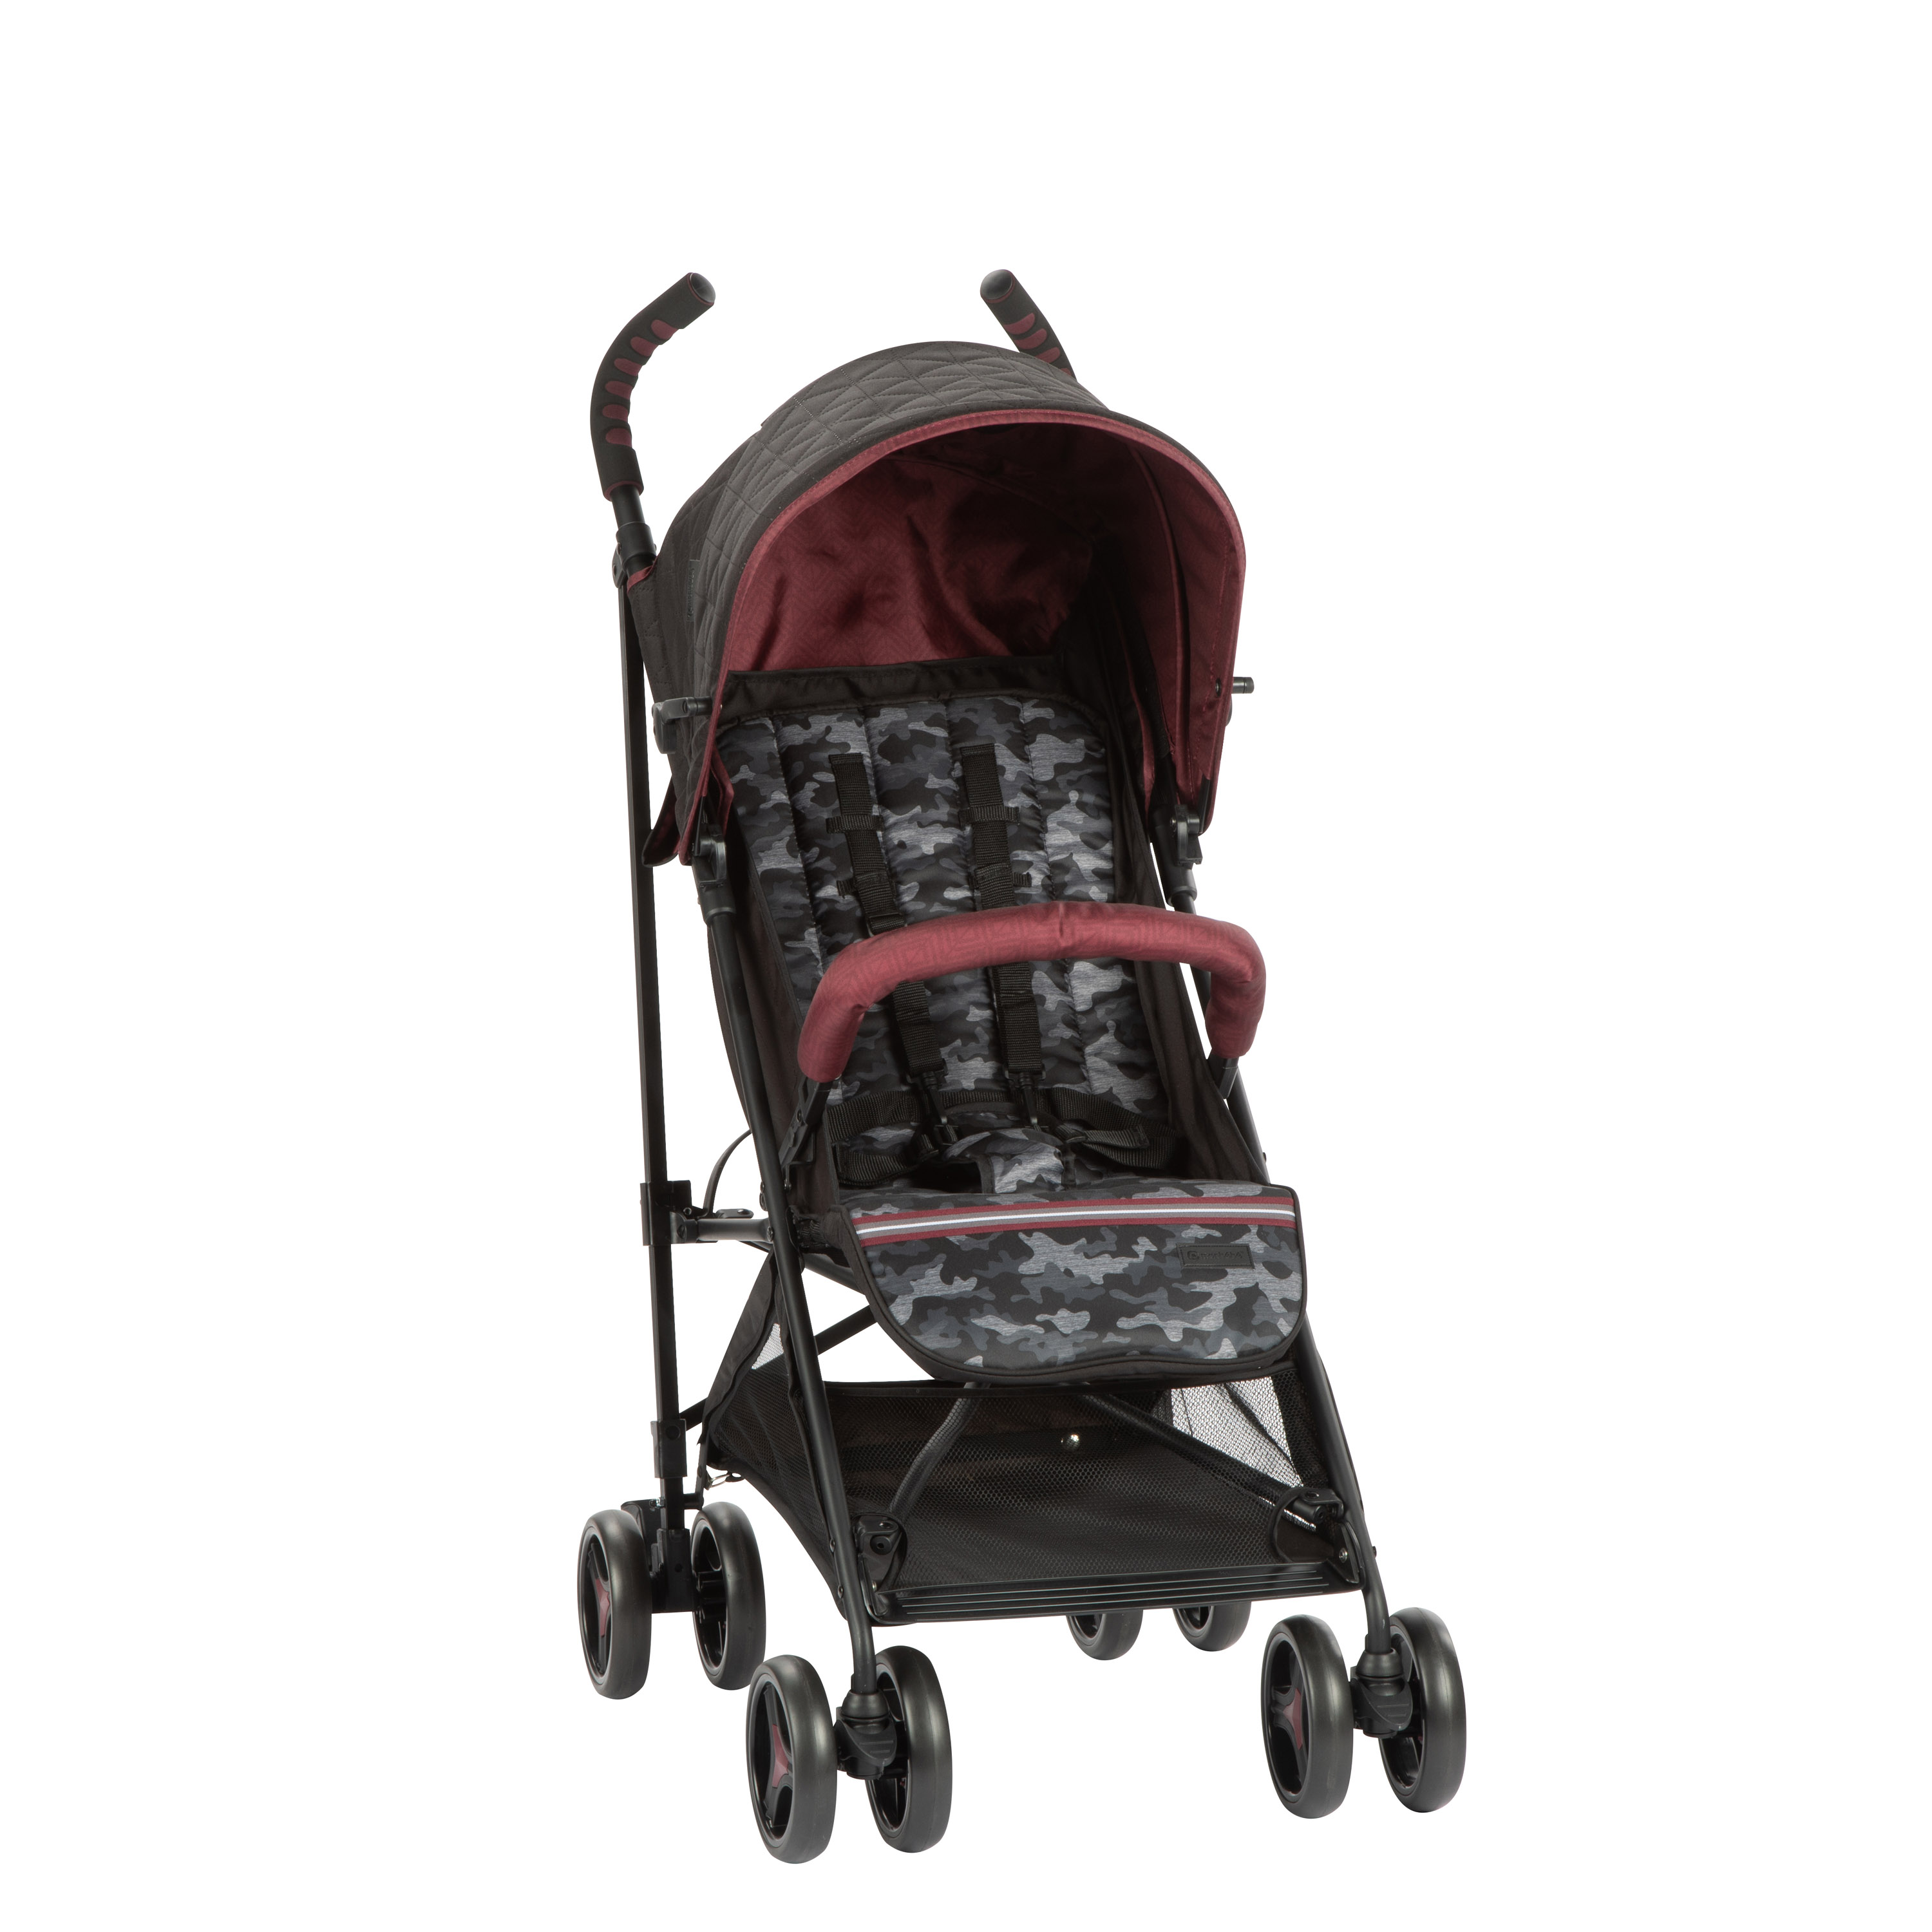 Monbebe Breeze Lightweight Compact Baby Stroller - Heather Camo